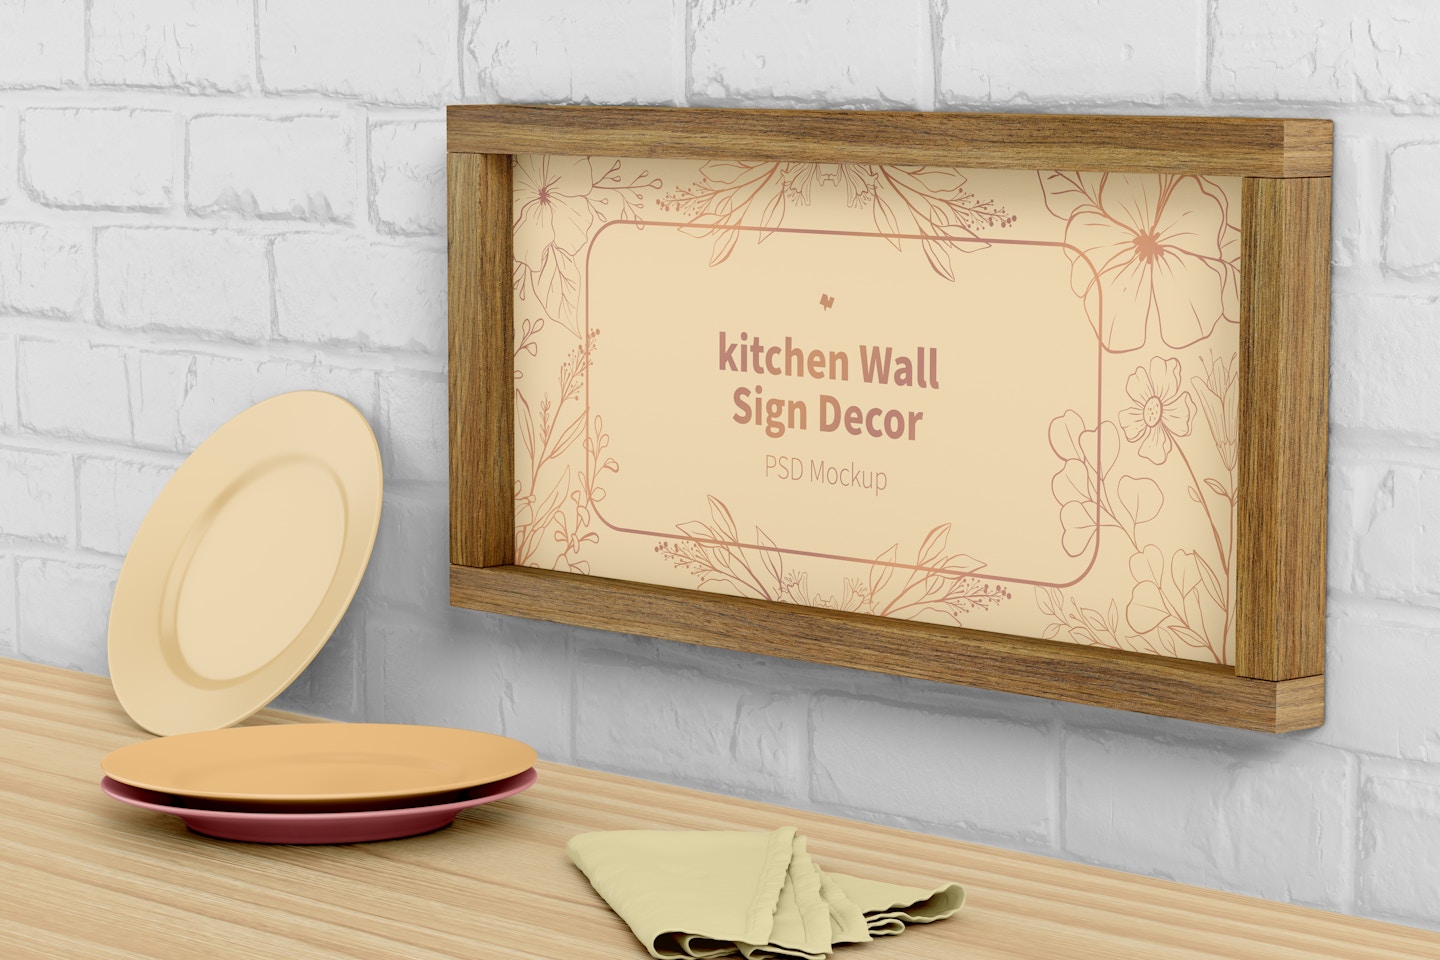 Kitchen Wall Sign Decor Mockup